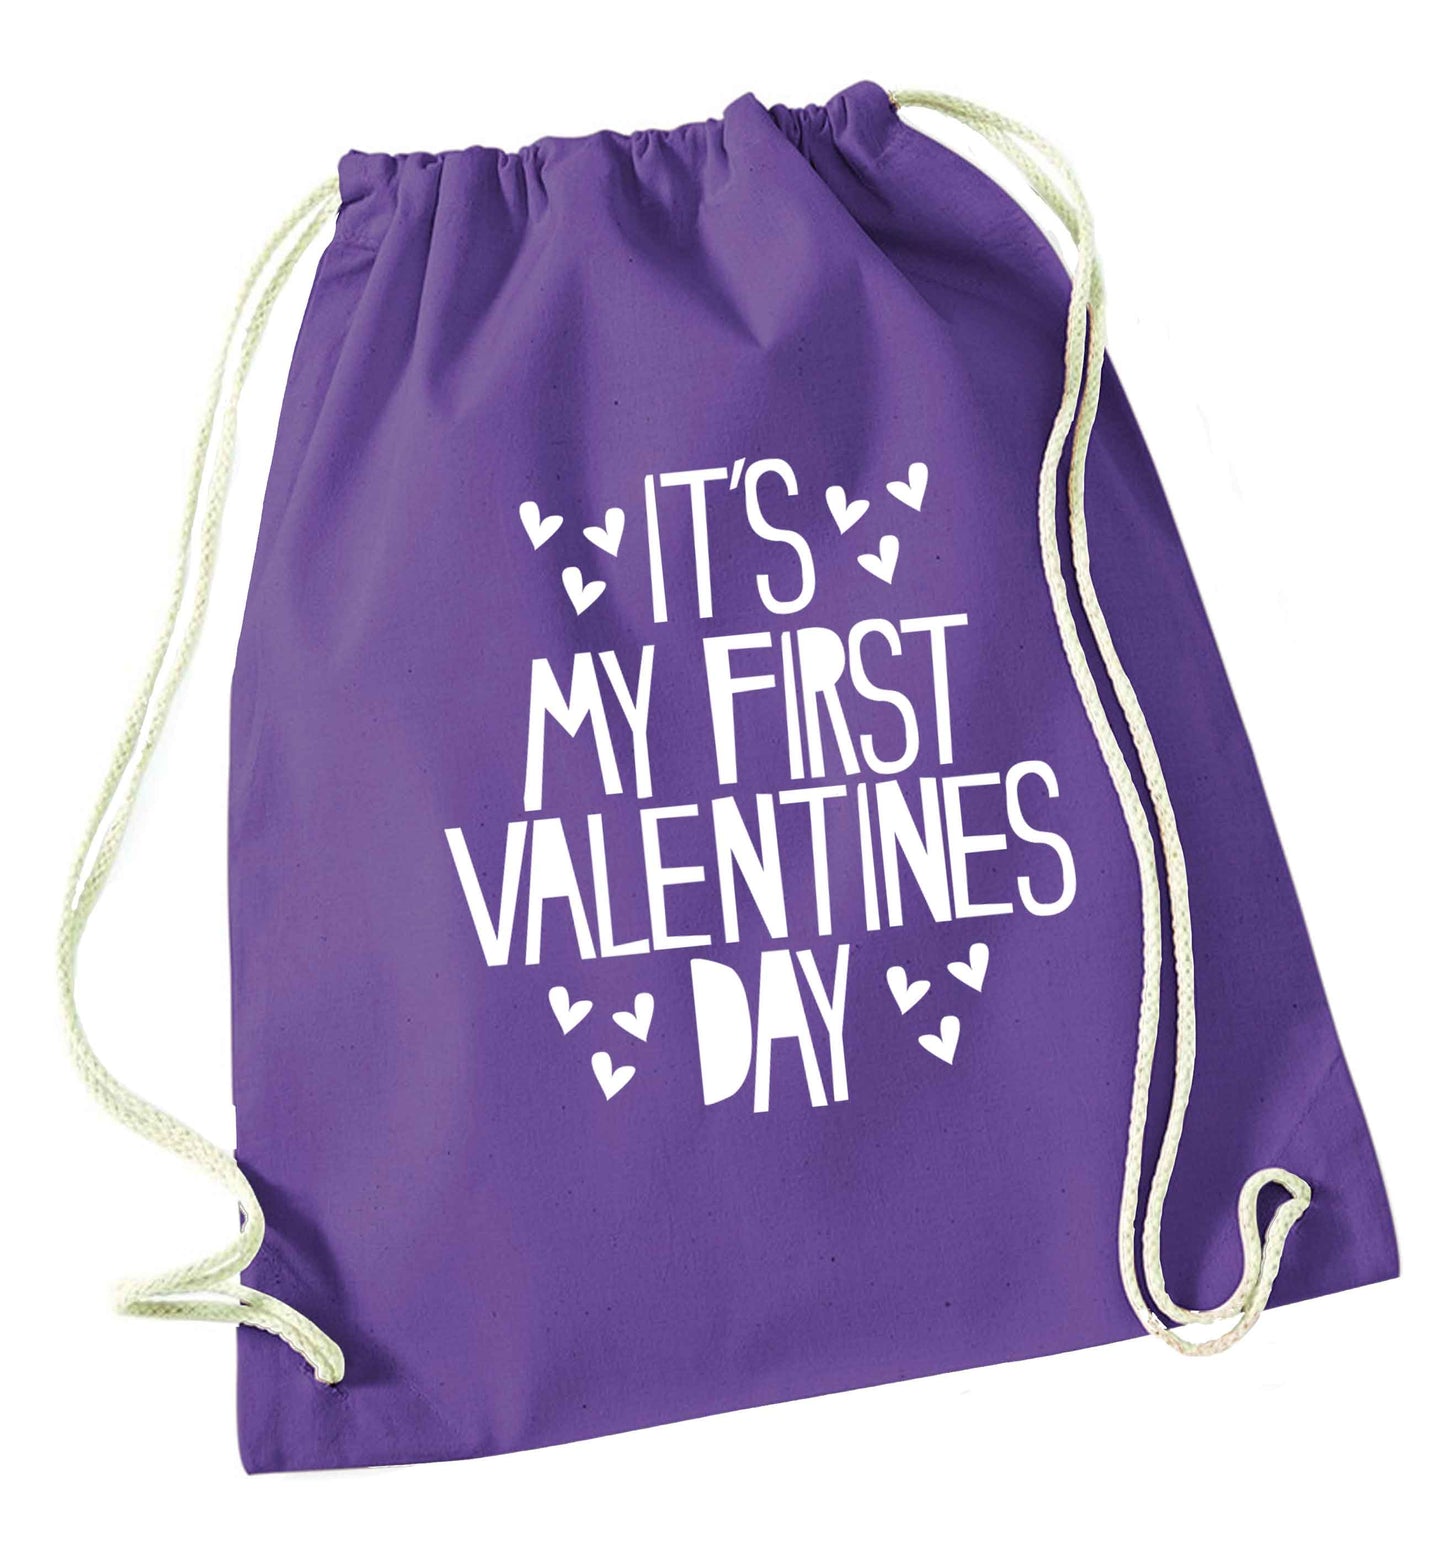 Hearts It's my First Valentine's Day purple drawstring bag